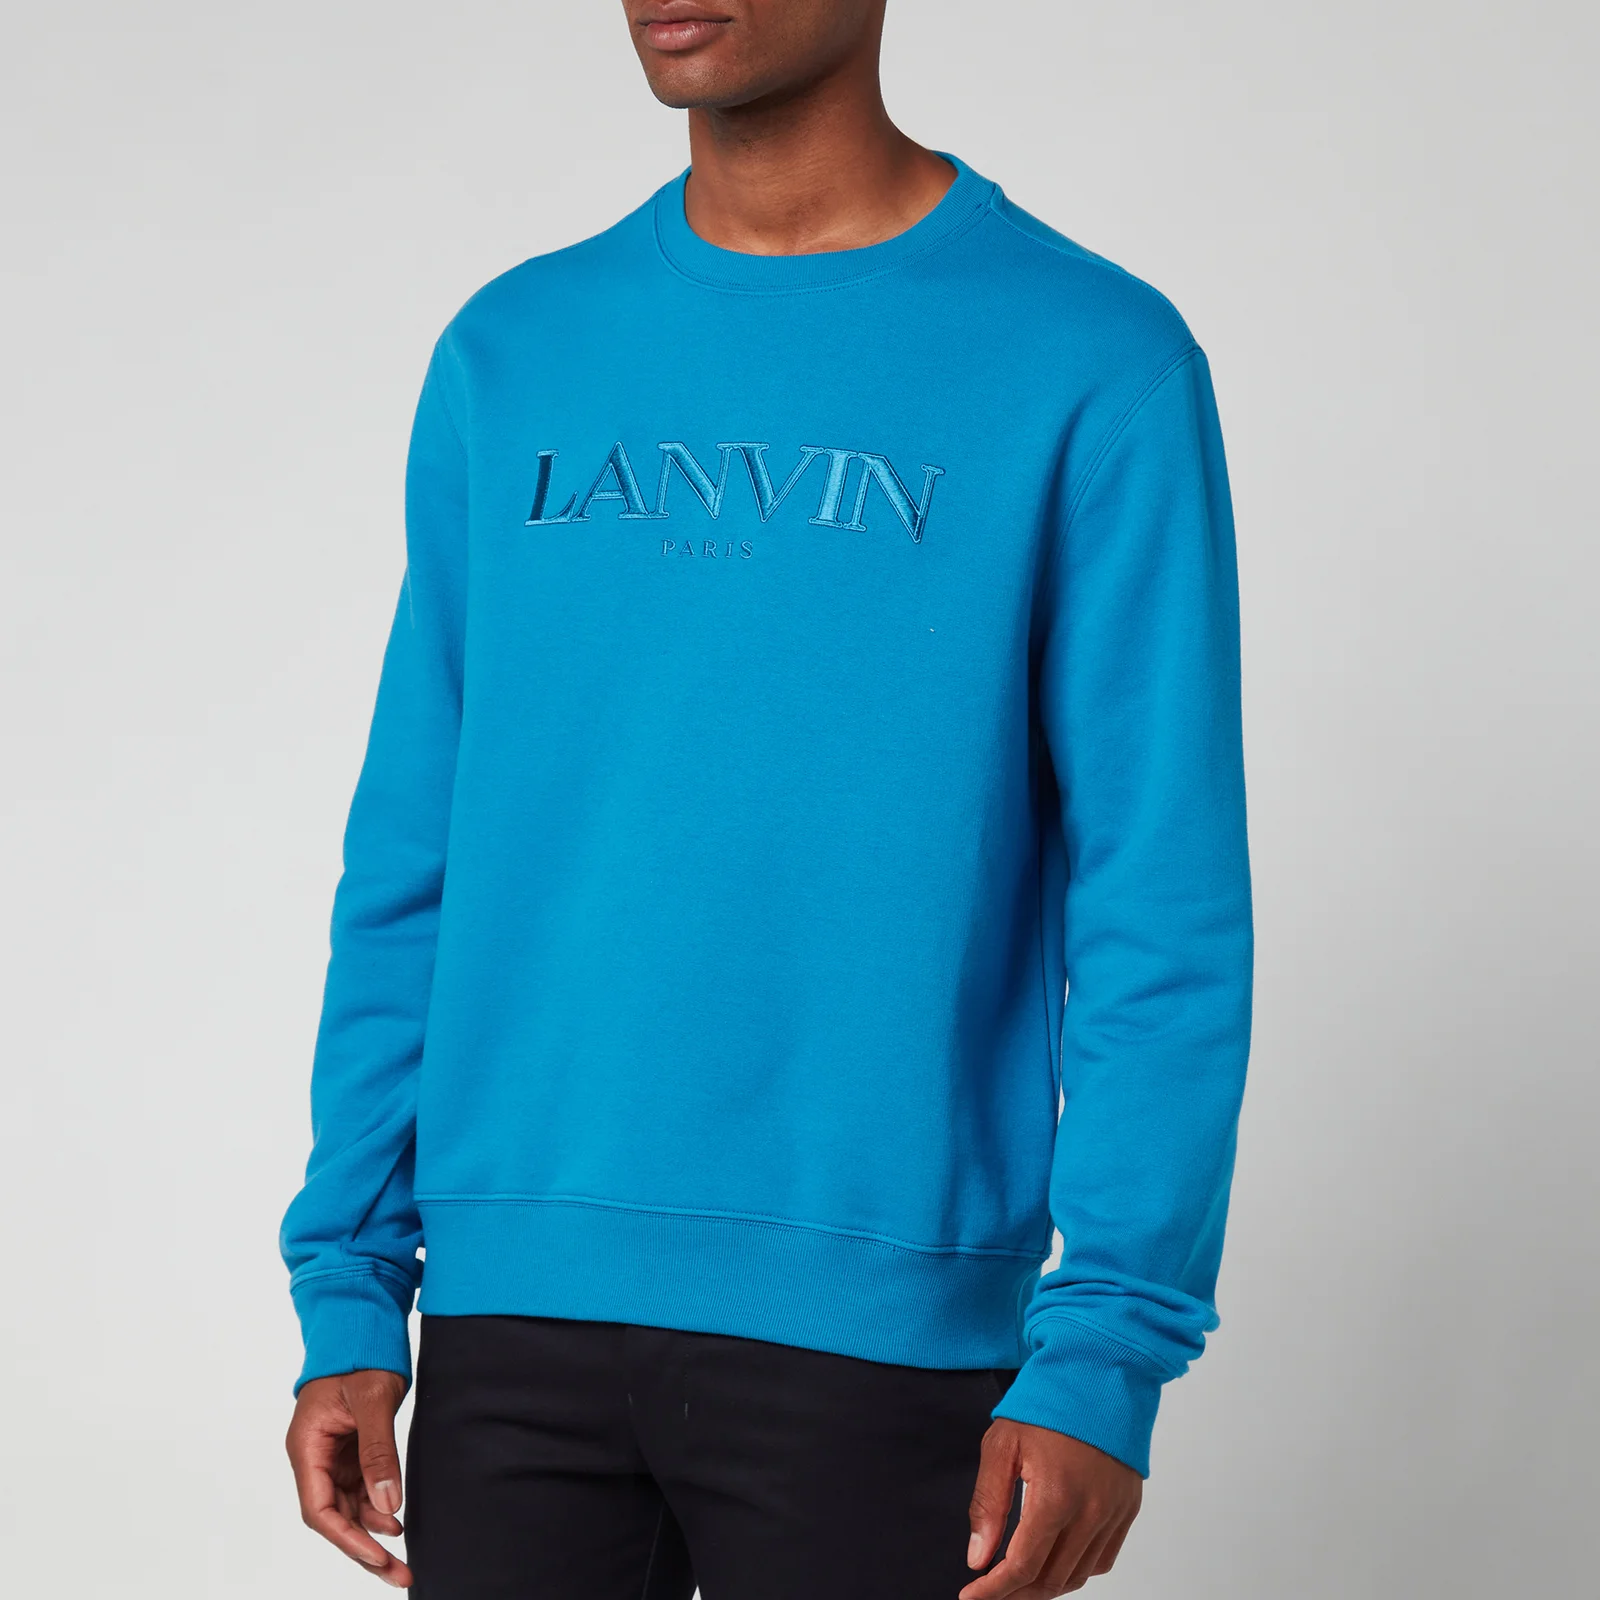 Lanvin Men's Paris Embroidered Sweatshirt - Pristine Blue Image 1